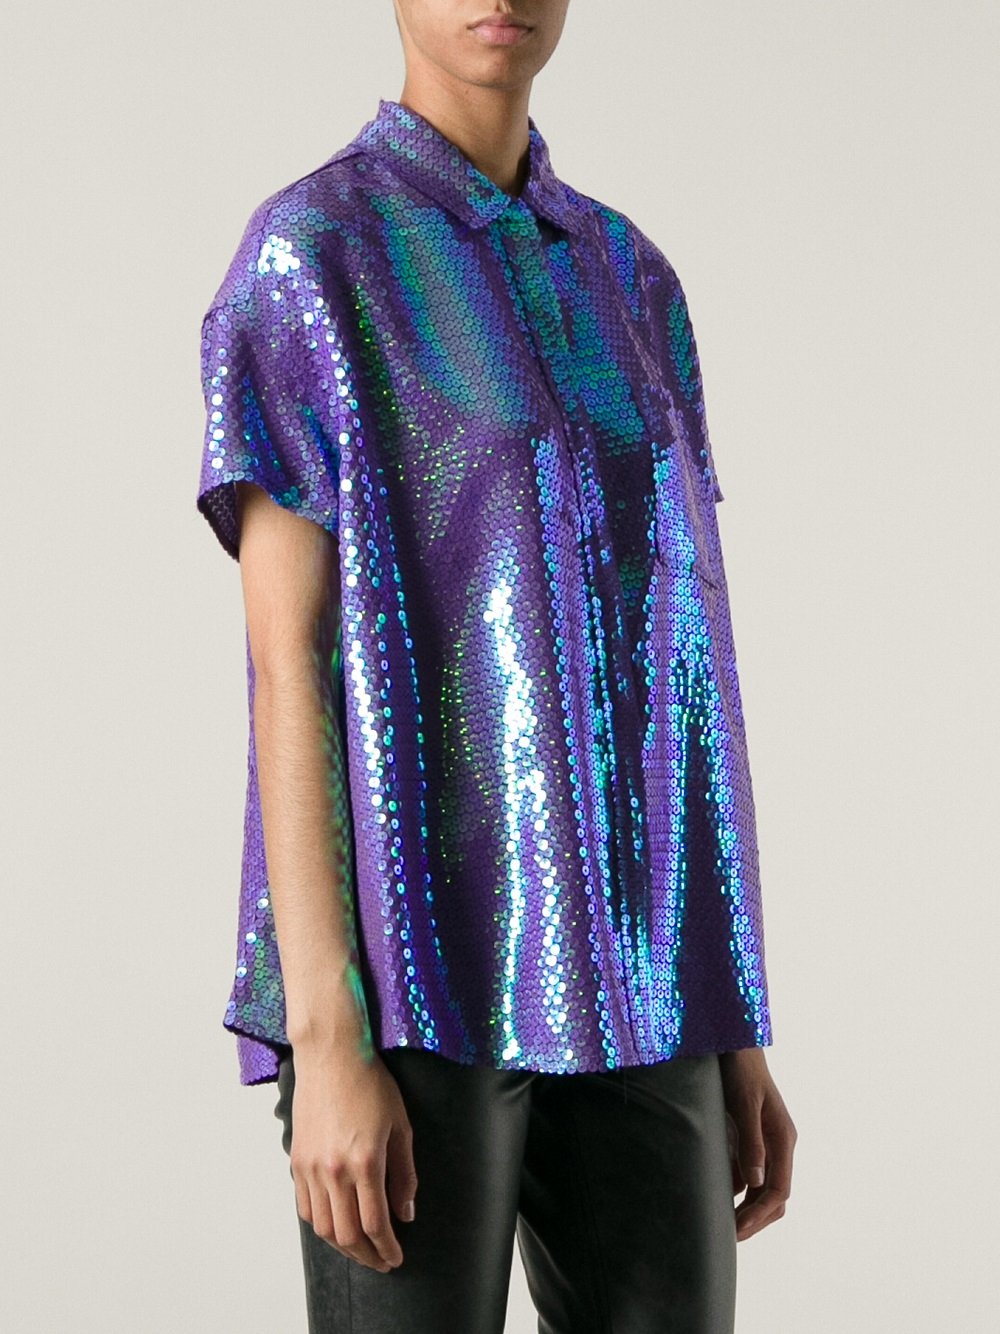 Acne Studios Sequin Shirt in Purple - Lyst